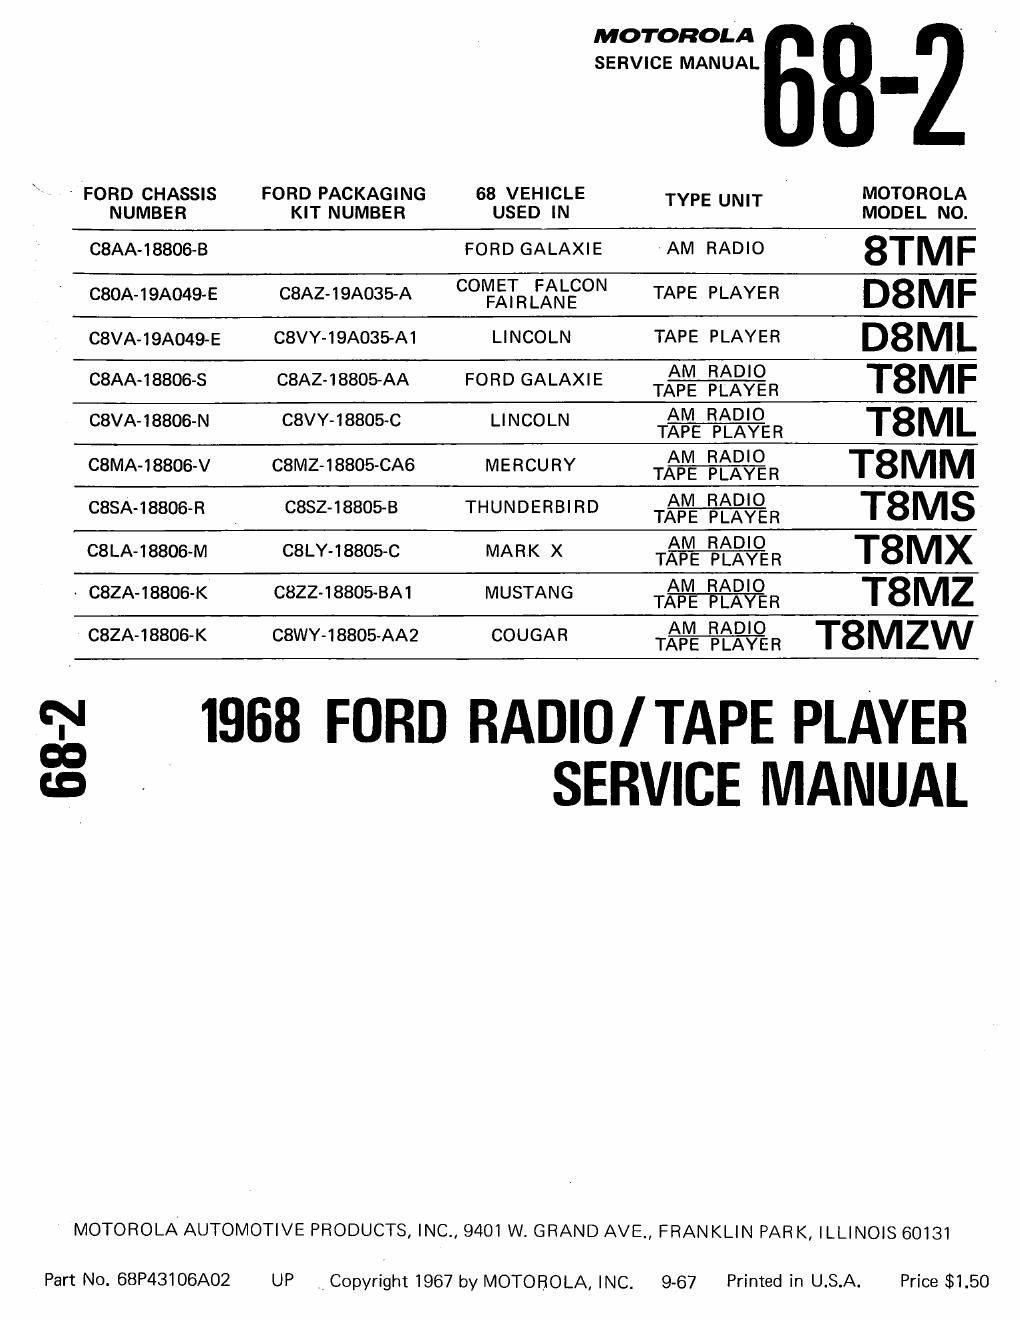 motorola t 8 mzw service manual